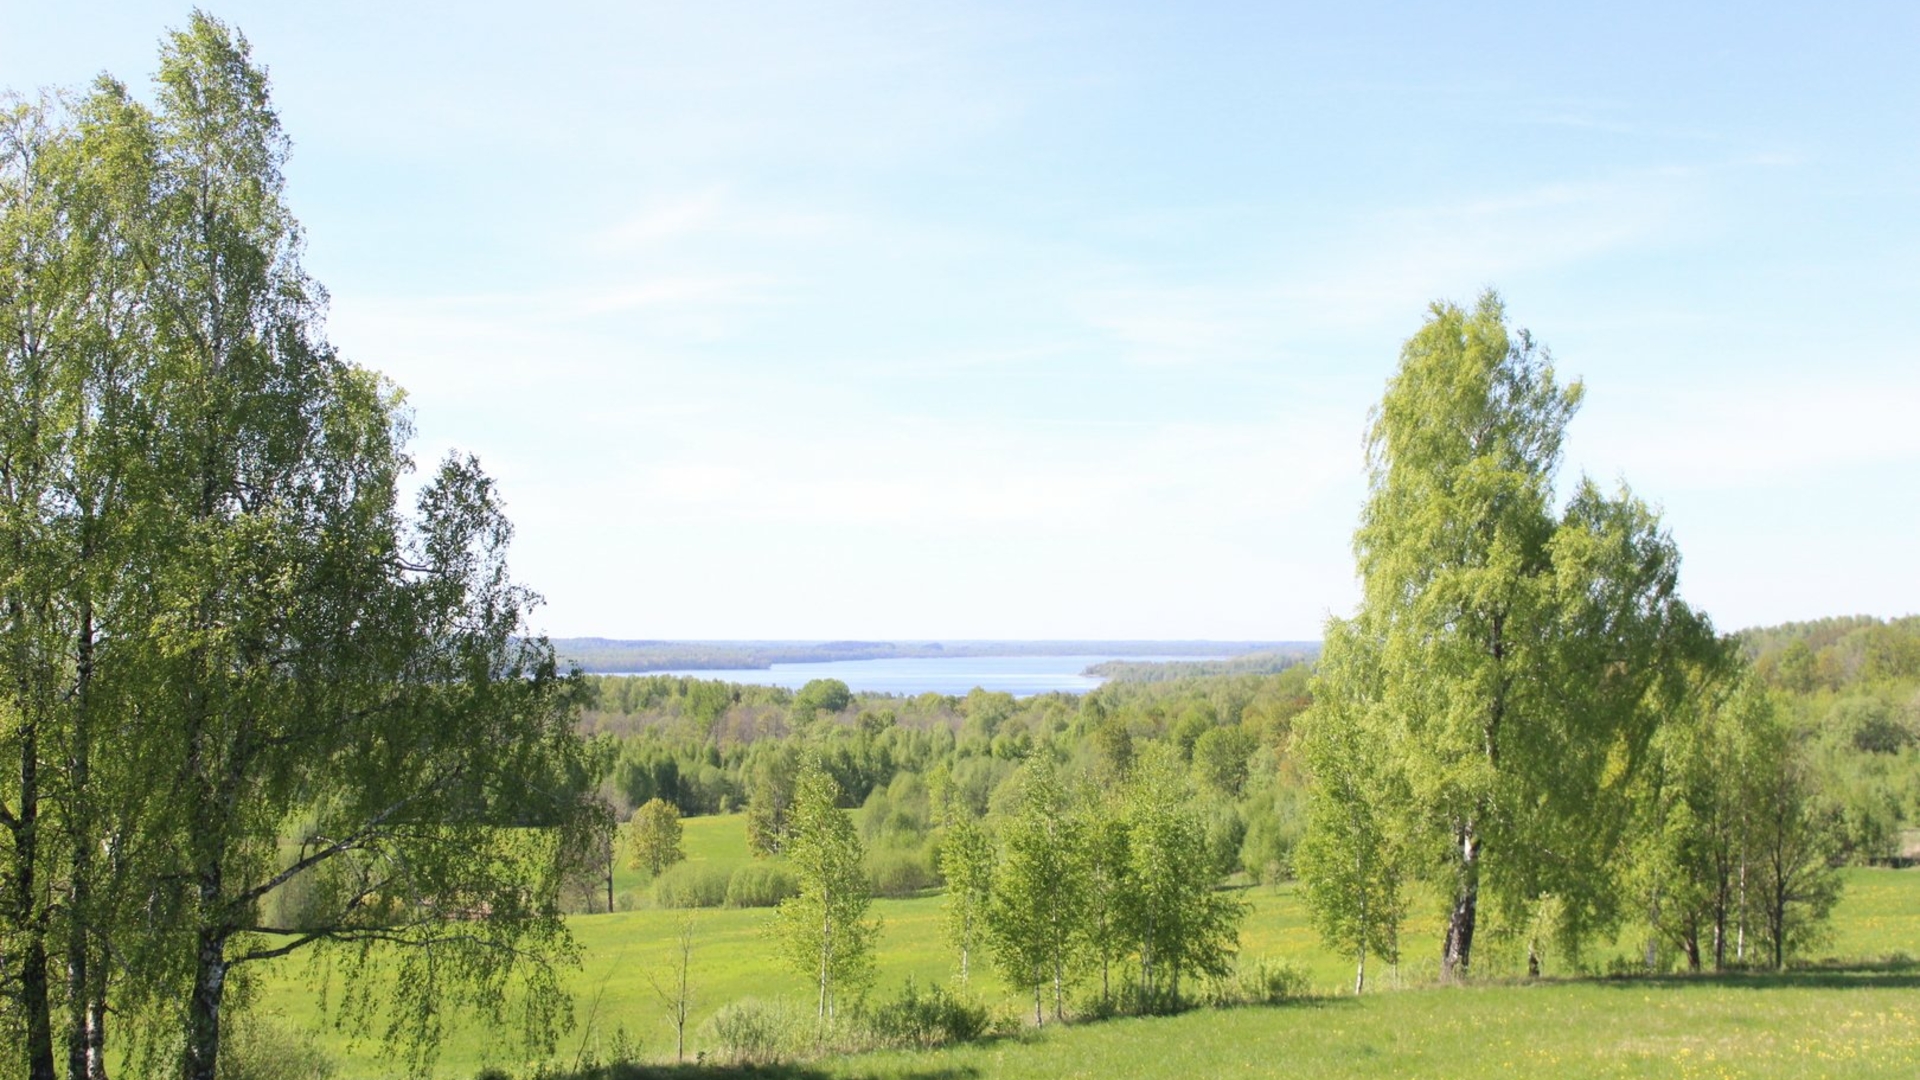 Lake Sauka and its surroundings